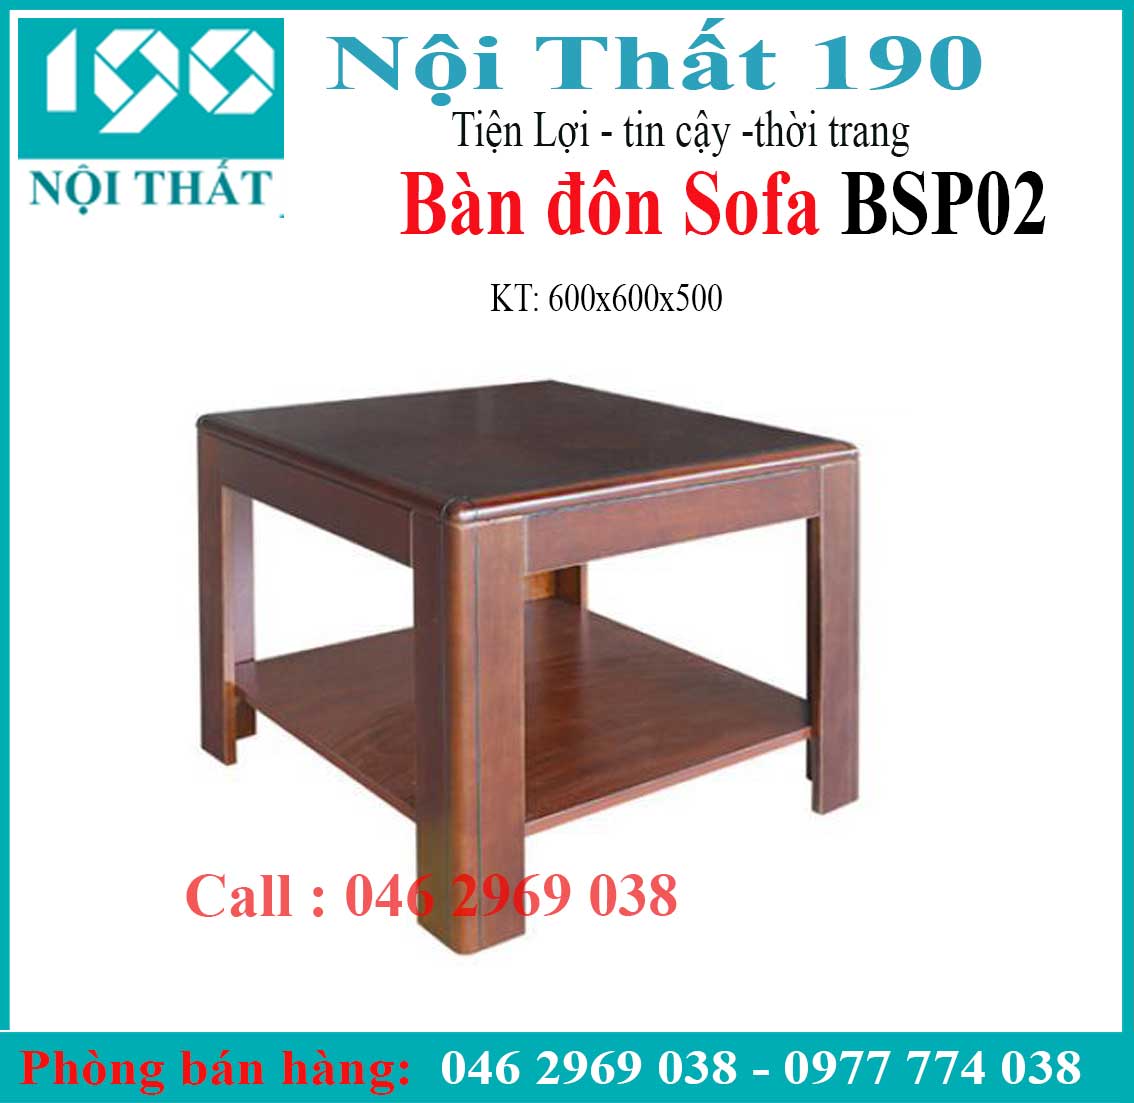 Bàn sofa BSP02